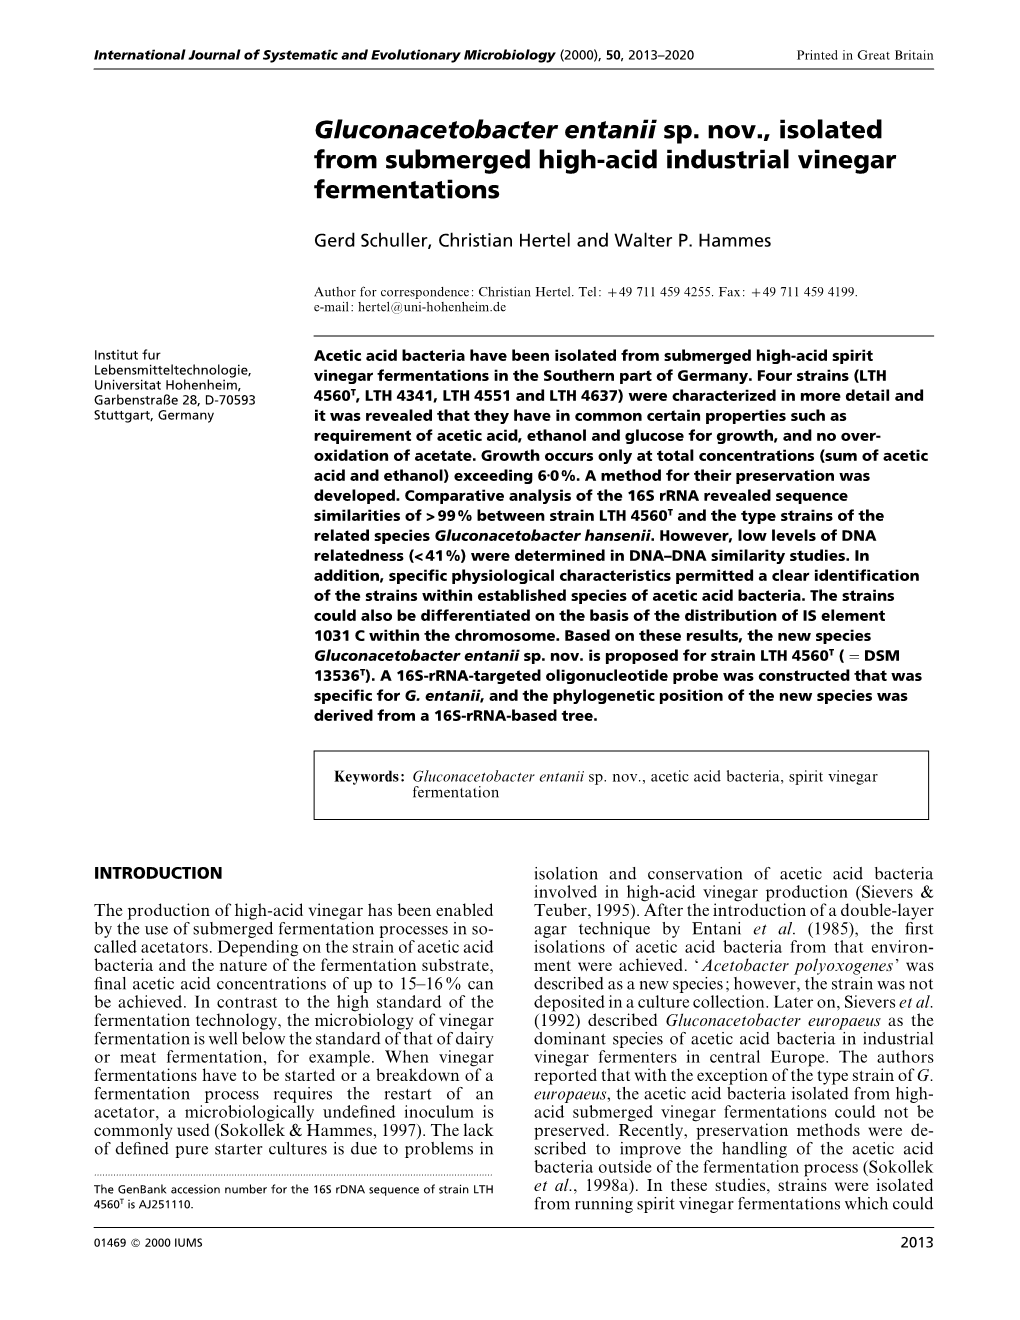 Gluconacetobacter Entanii Sp. Nov., Isolated from Submerged High-Acid Industrial Vinegar Fermentations